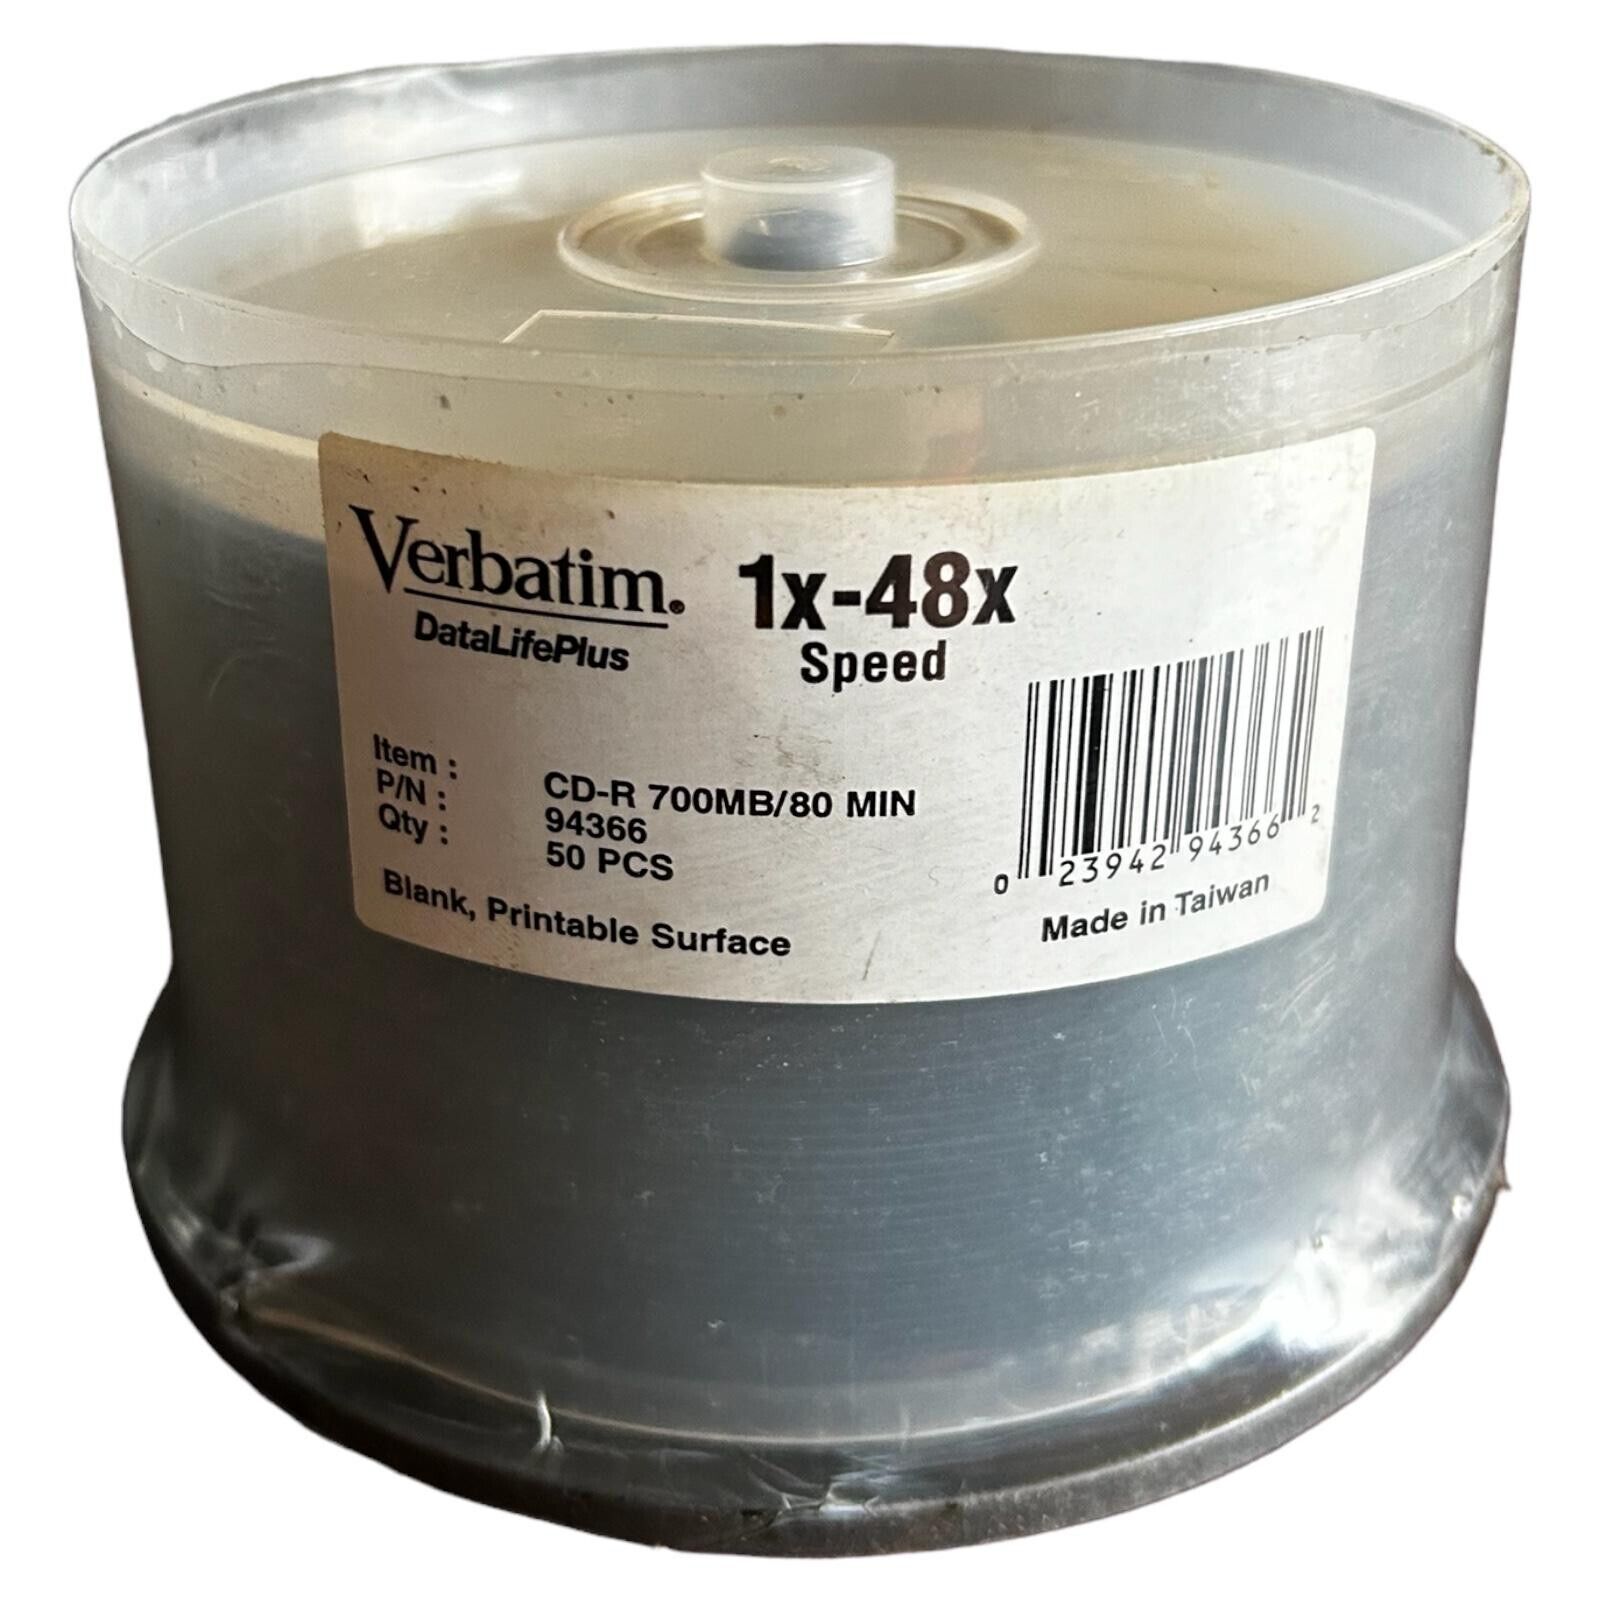 Vintage Verbatim CD-R 700MB 48X DataLifePlus White Inkjet Printable